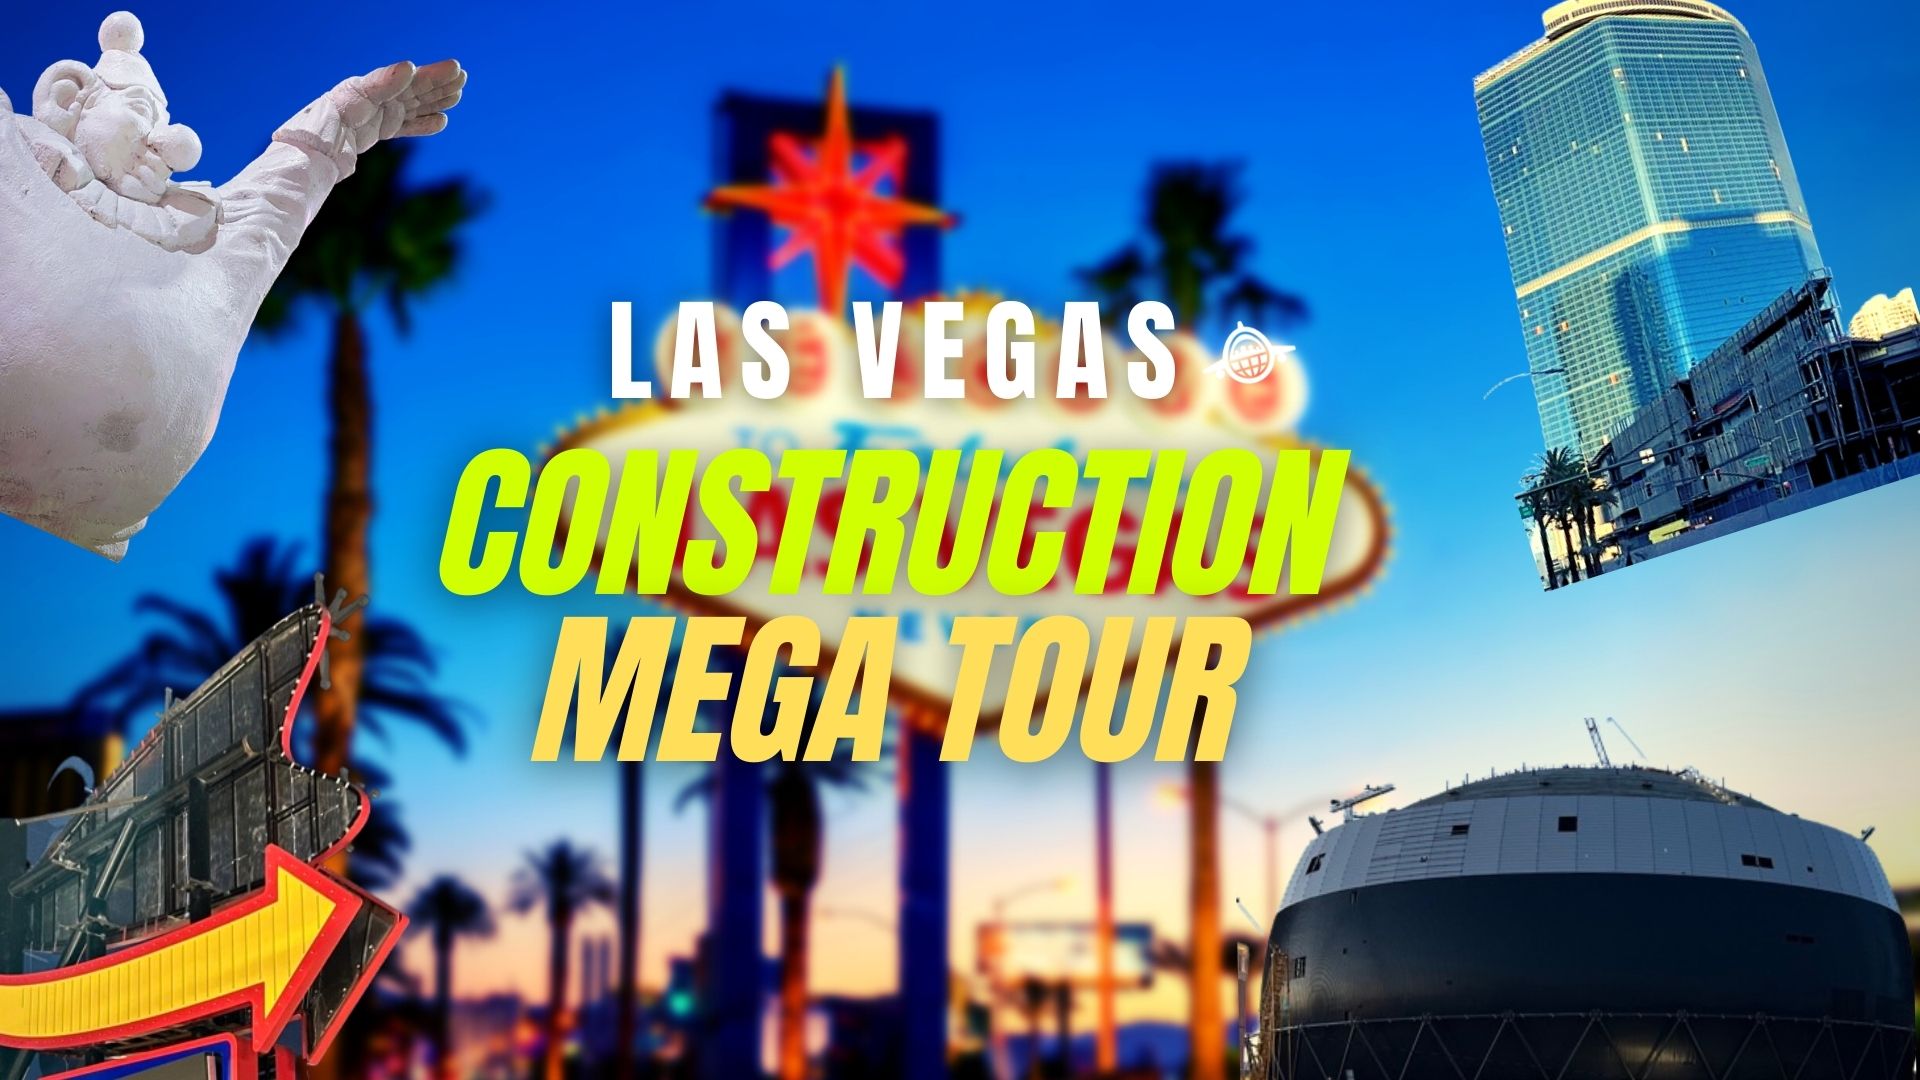 Las Vegas Construction Tour Hot New Projects for 2022 & Beyond!